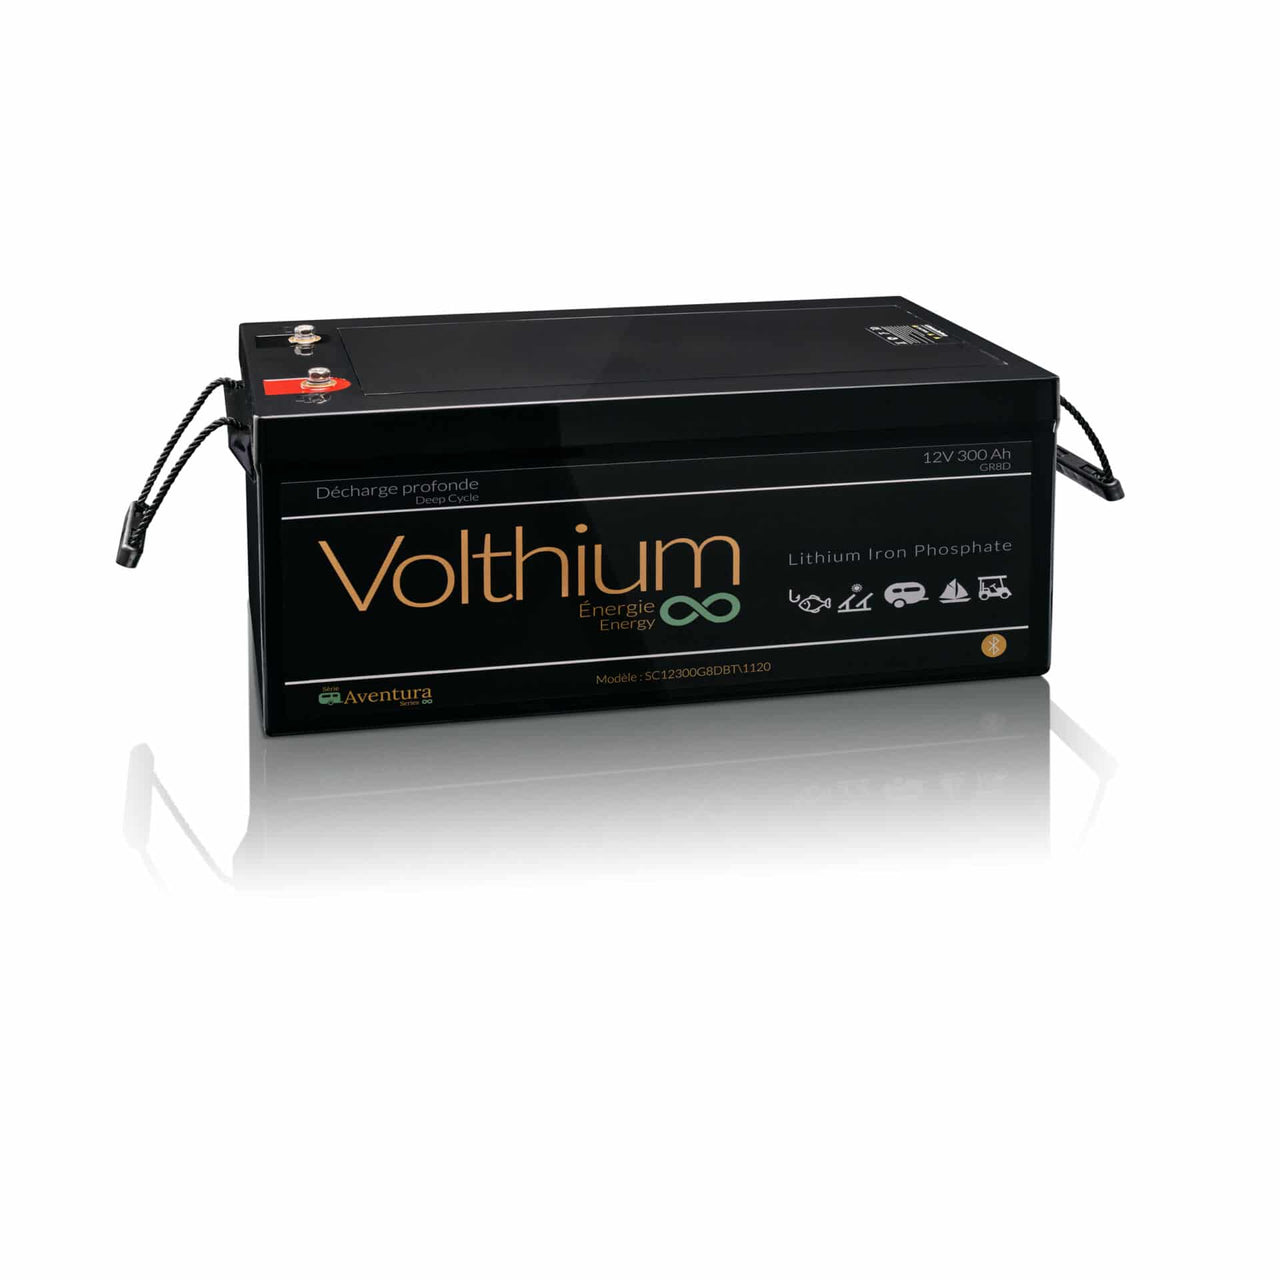 Volthium - Battery Aventura 12V 300AH - Self-heating - 12.8-300-G8DY-CH2O